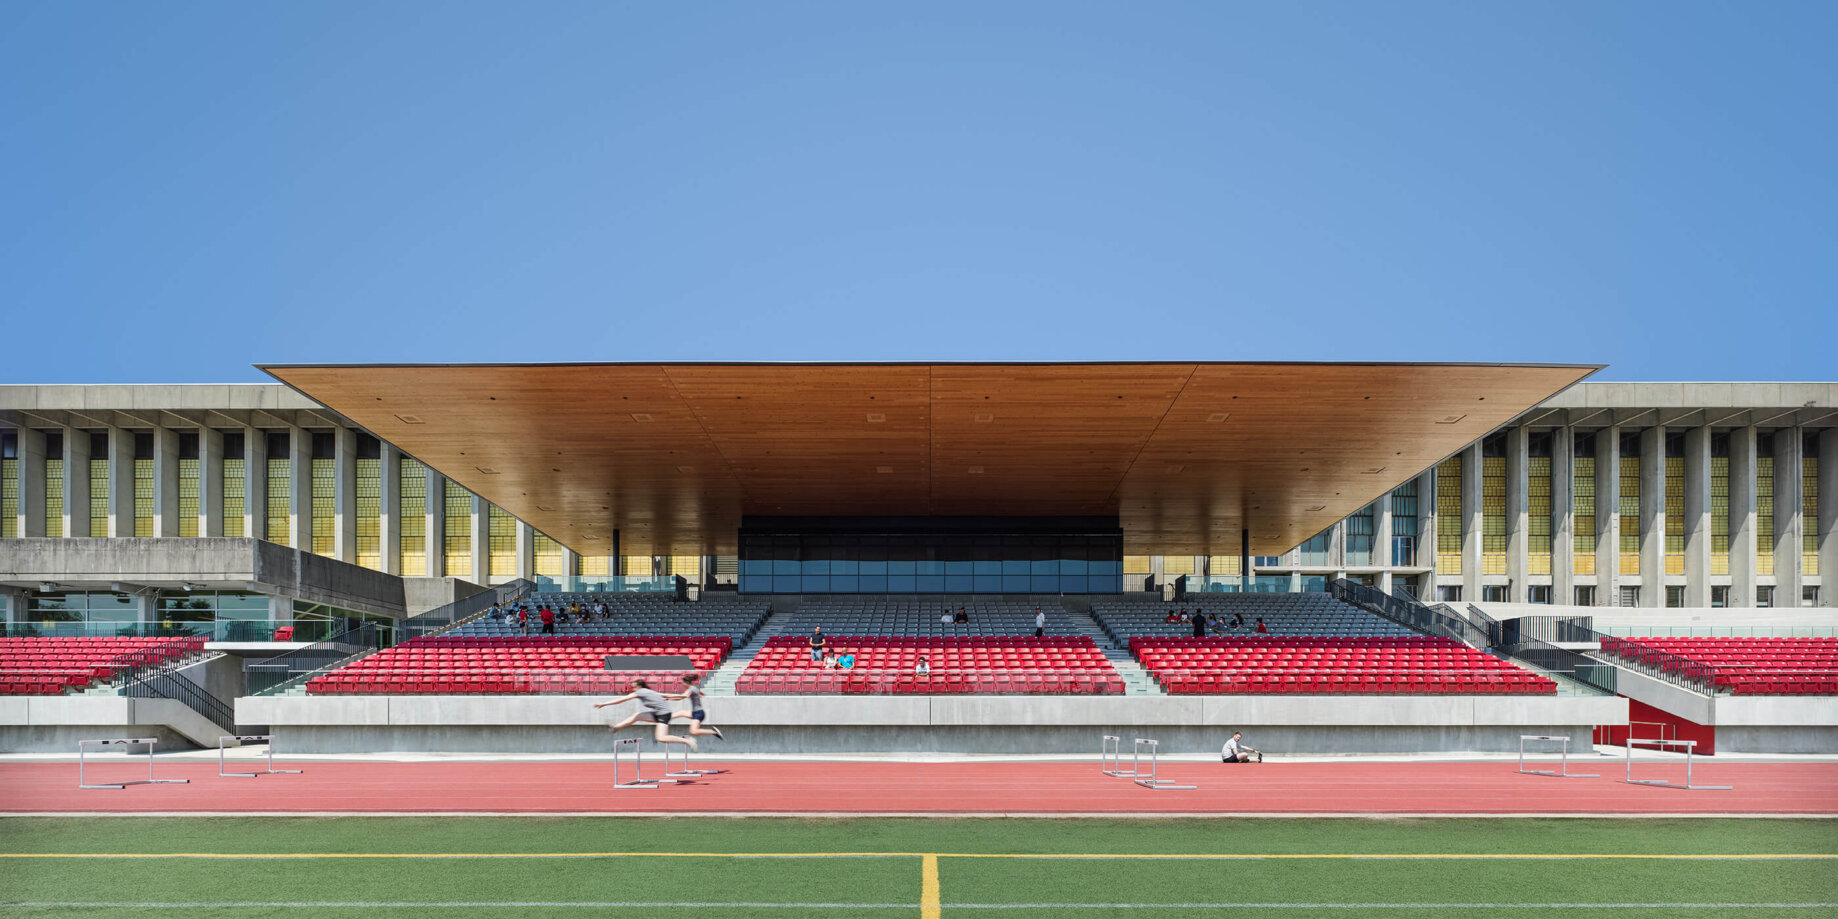 Innovative sports and recreation architecture: Simon Fraser University’s new stadium canopy